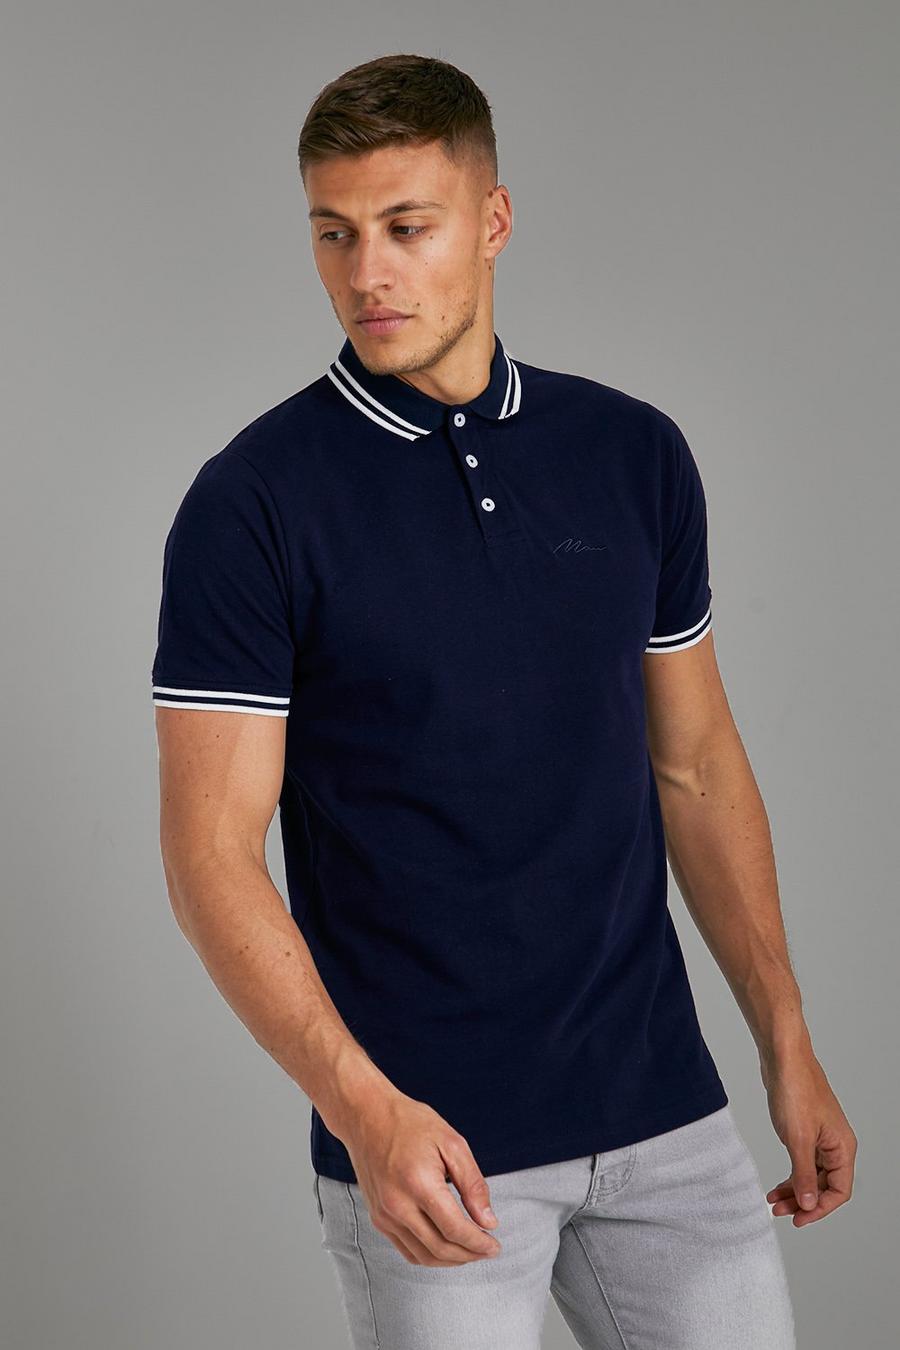 Mens Zipper Short Sleeve Polo Shirts Fashion Slim Fit Casual Summer Workout T Shirt Top Polo Shirts for Men 